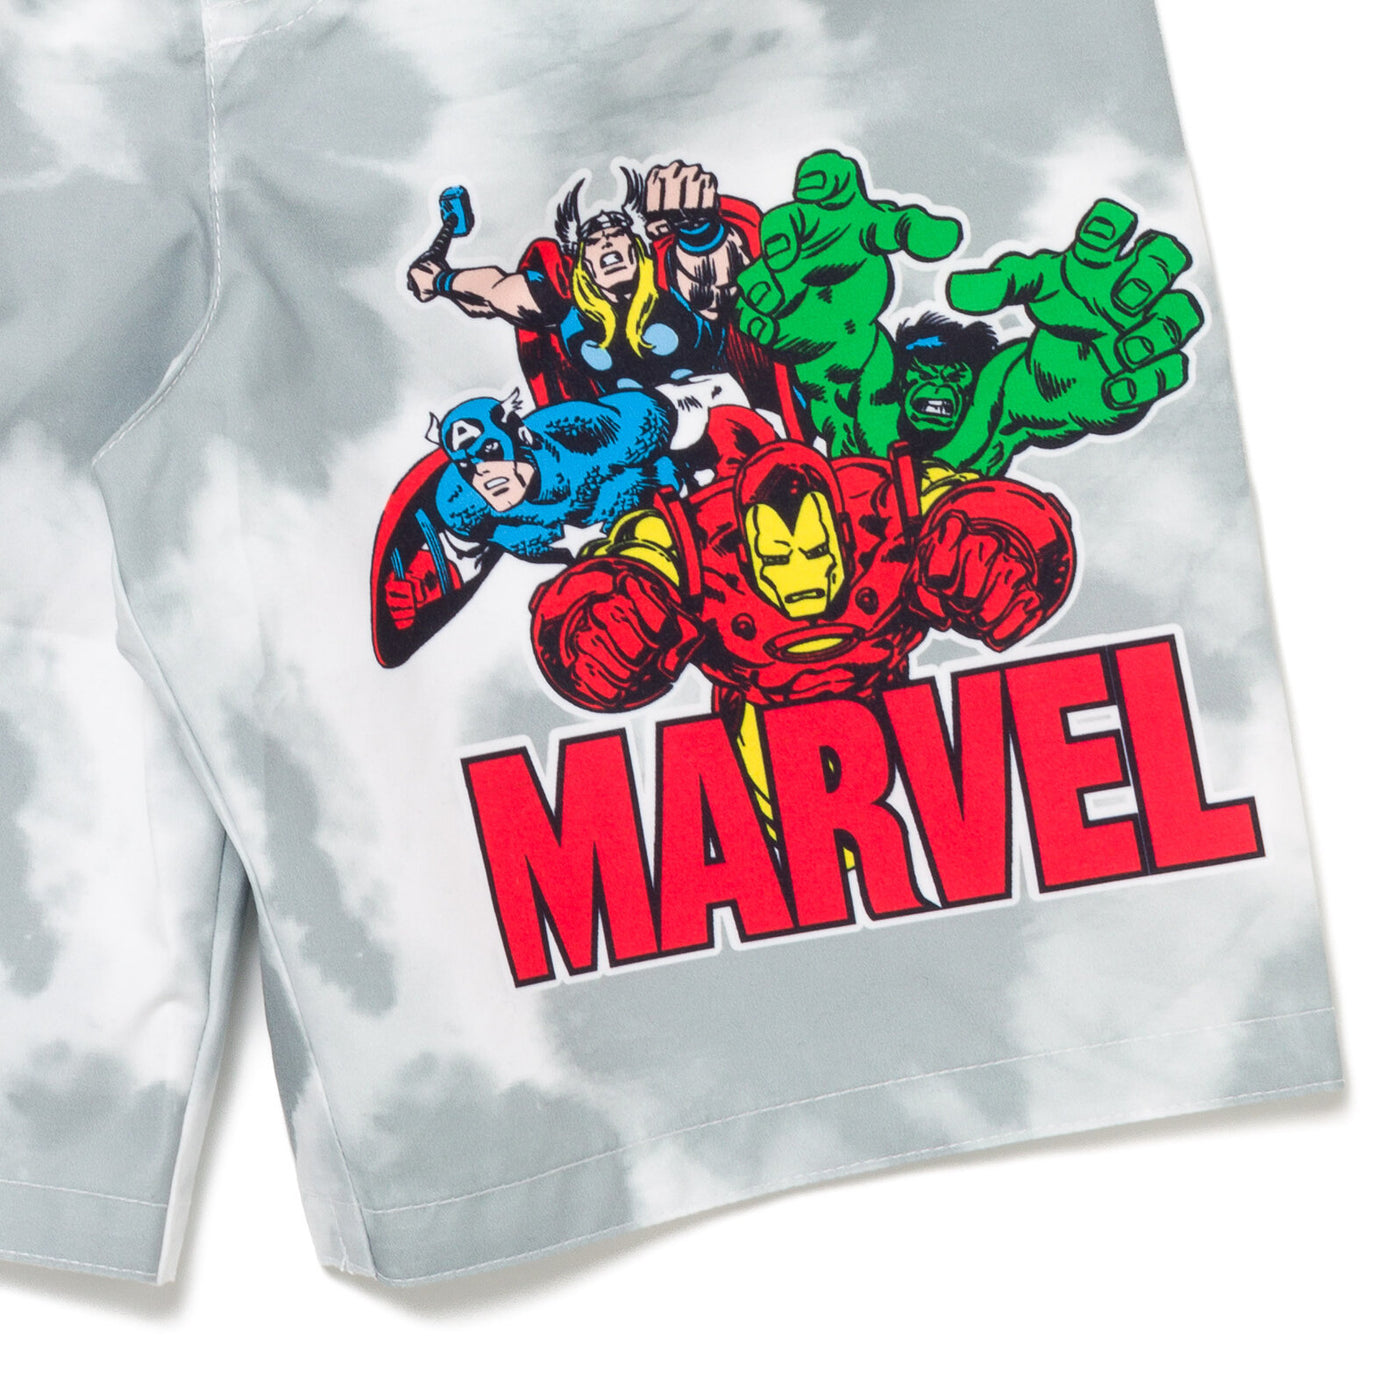 Marvel Avengers UPF 50+ Rash Guard Swim Trunks Outfit Set